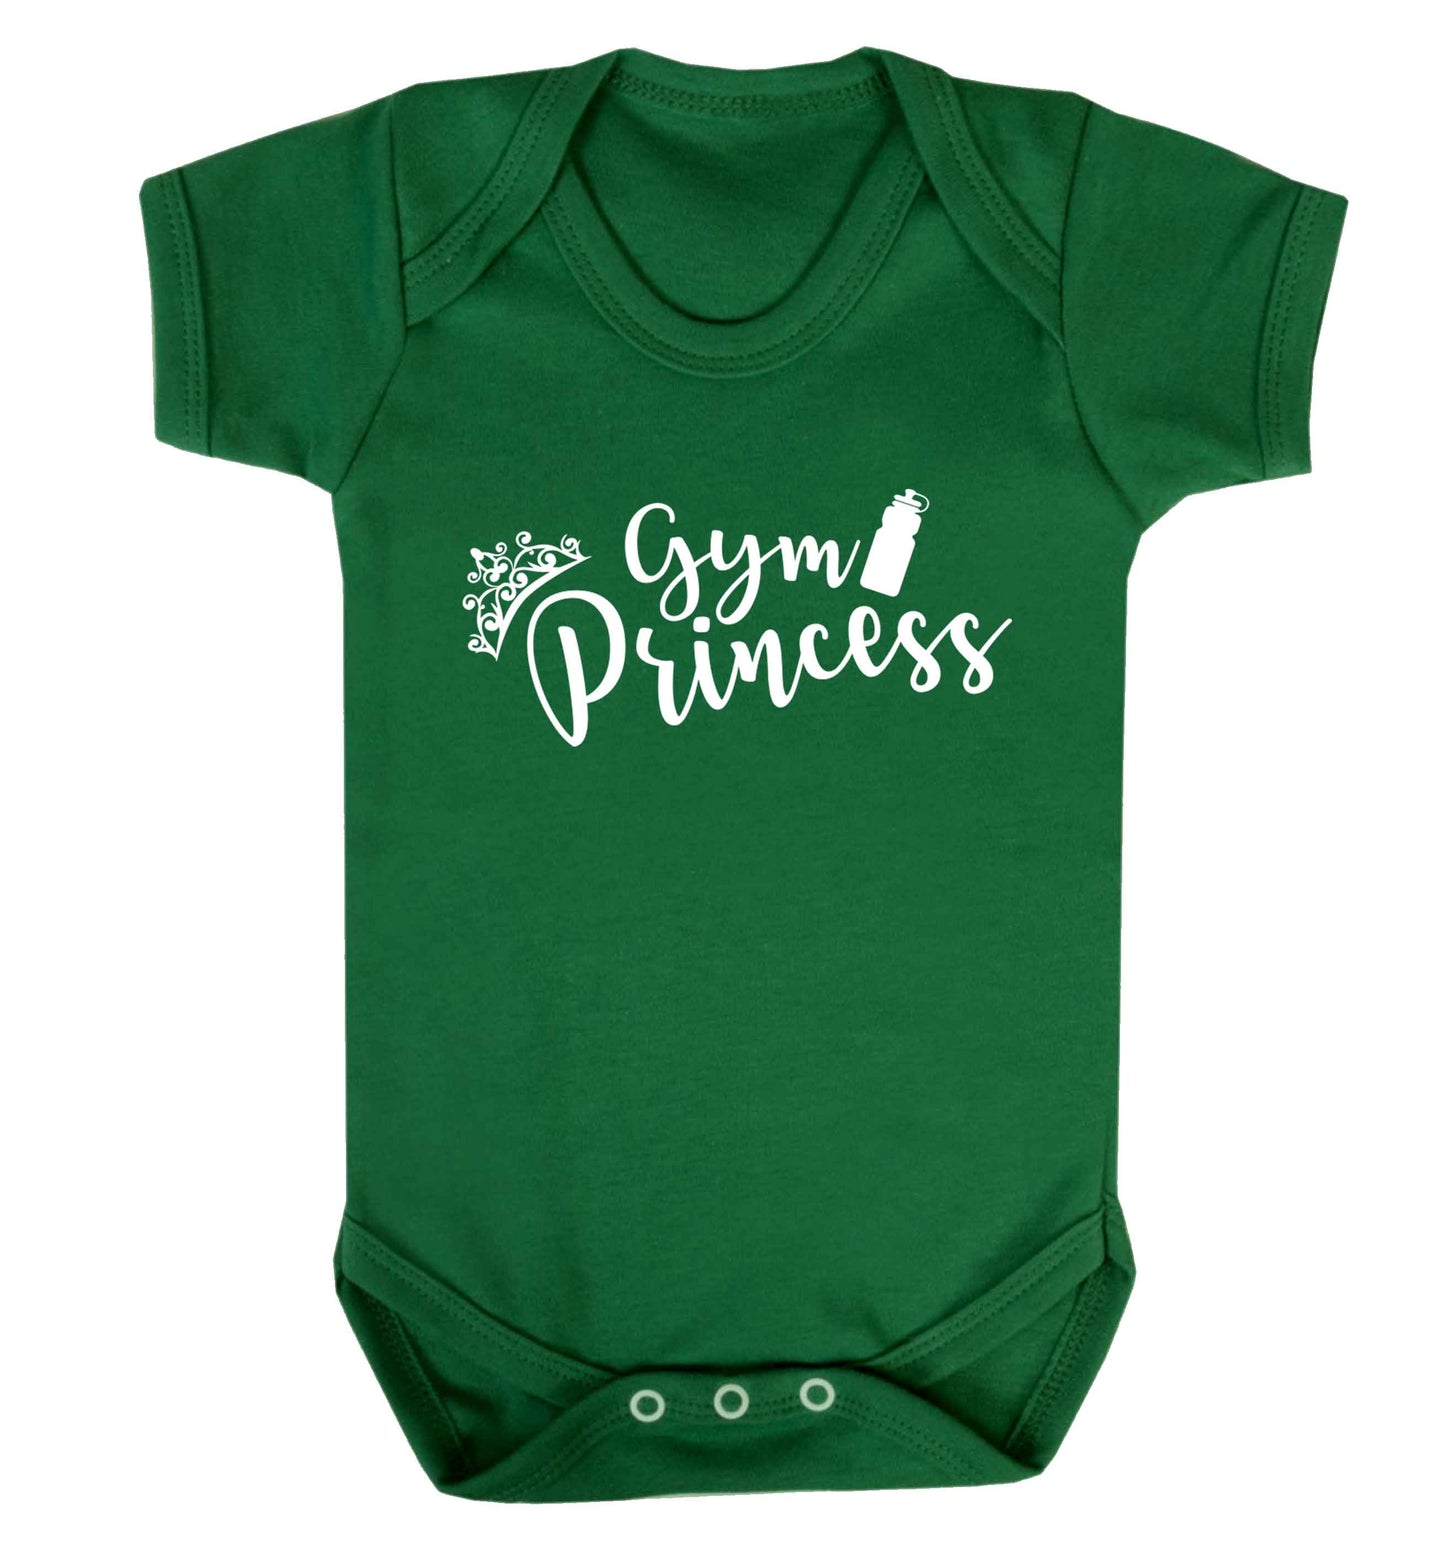 Gym princess Baby Vest green 18-24 months